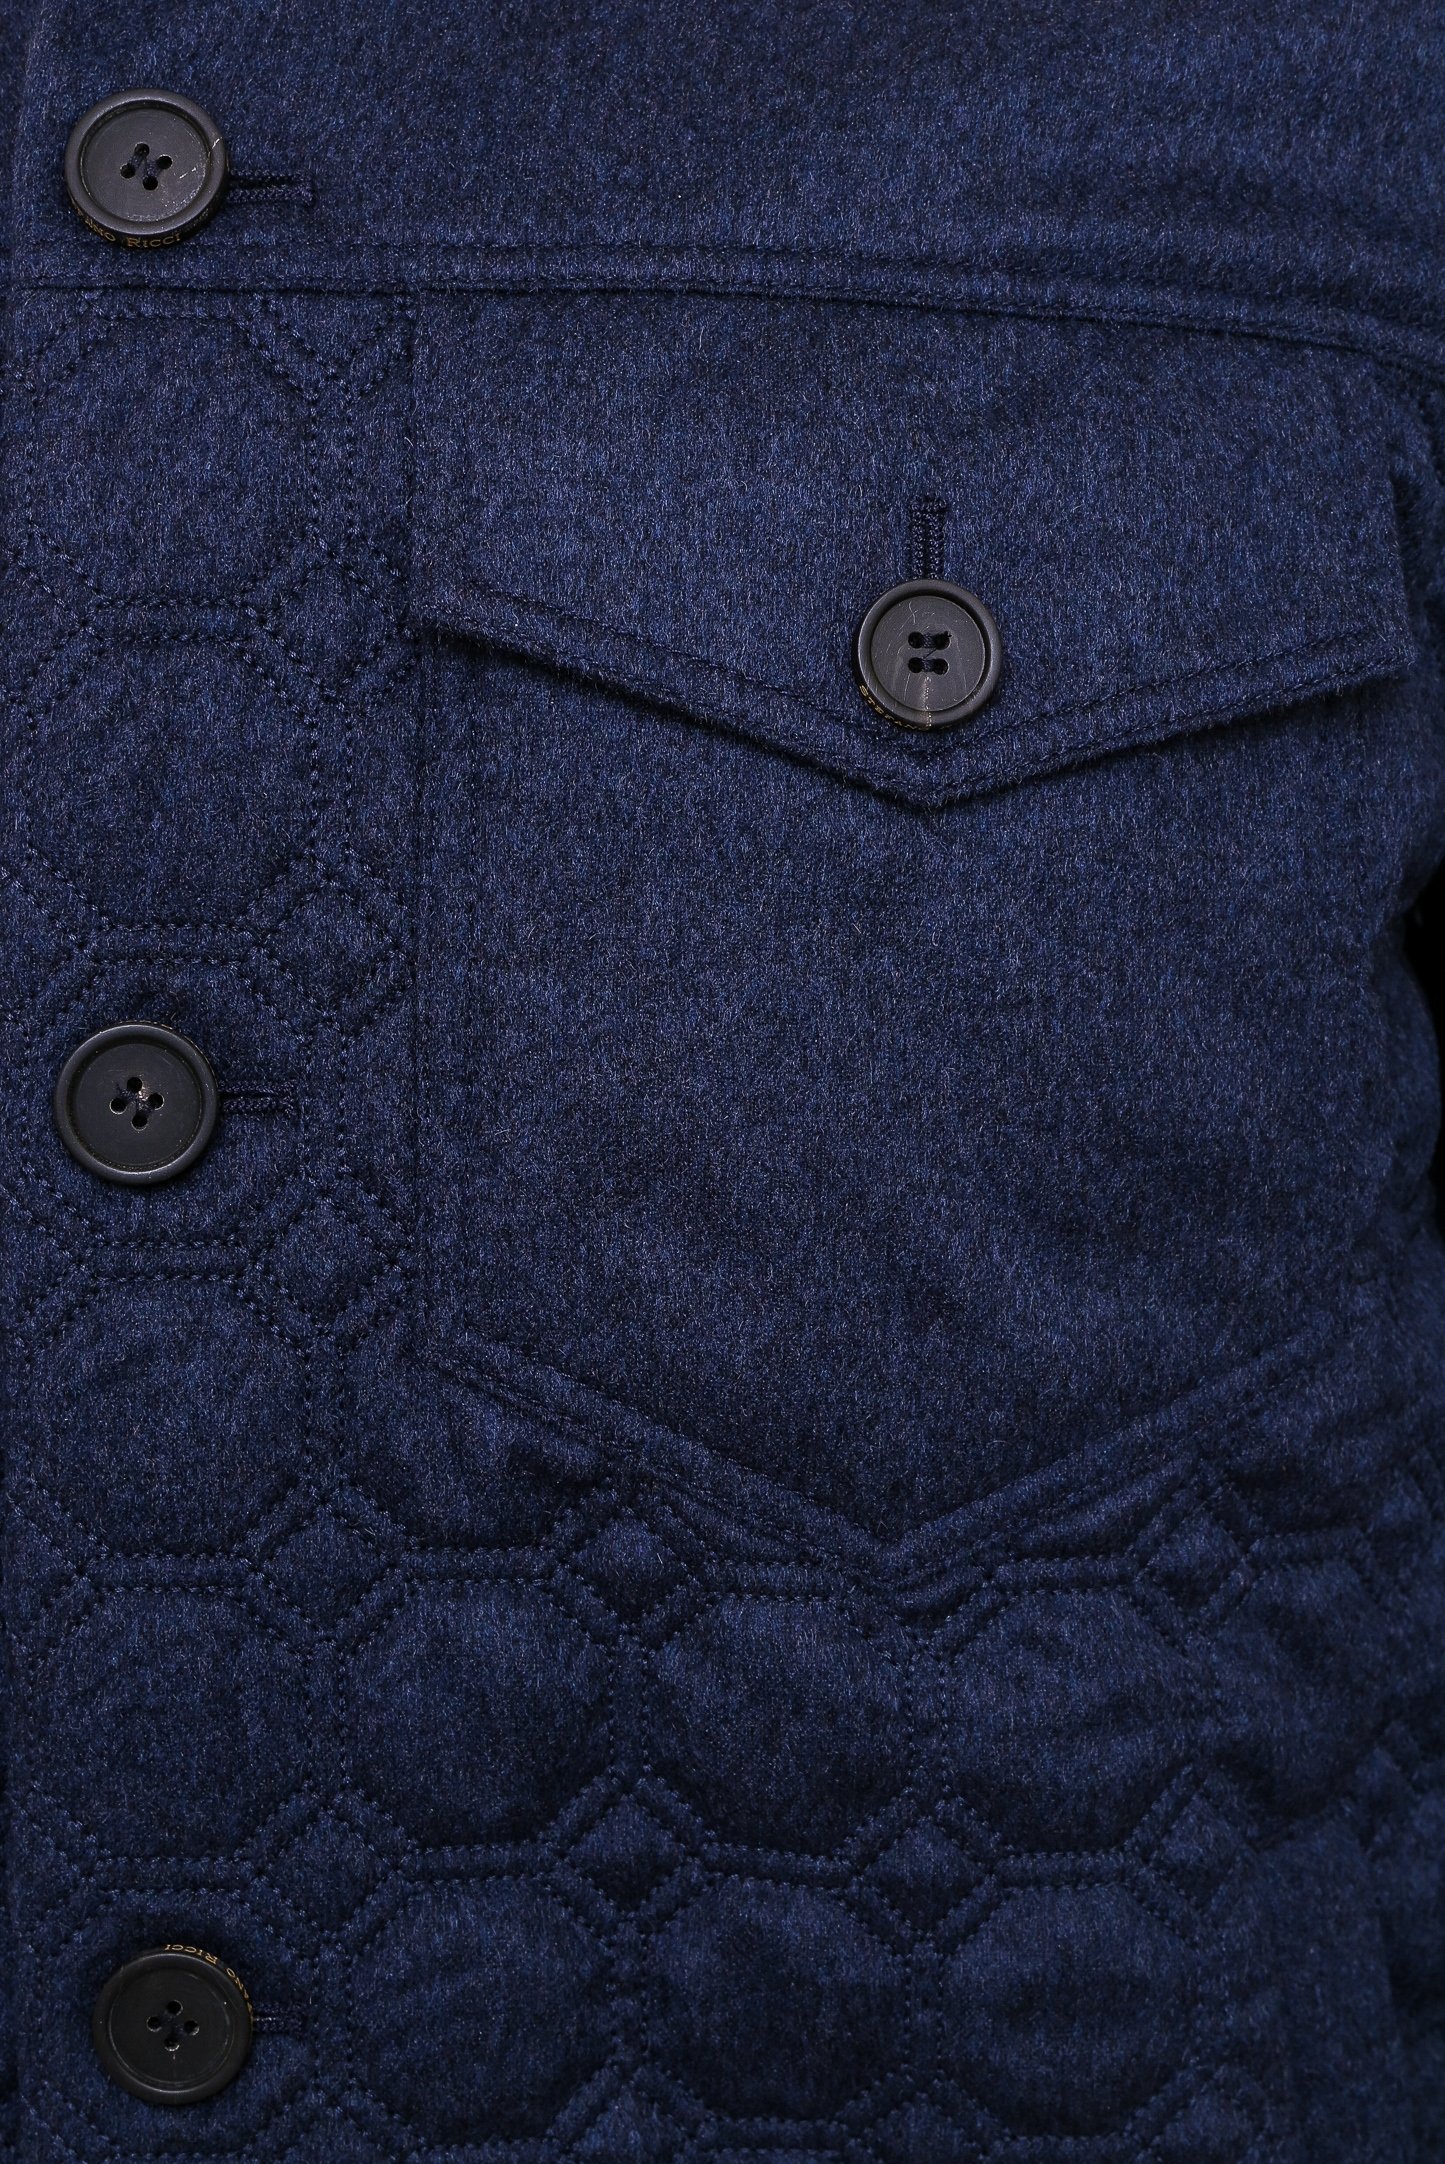 Куртка STEFANO RICCI M7J1400200 C603, цвет: Синий, Мужской